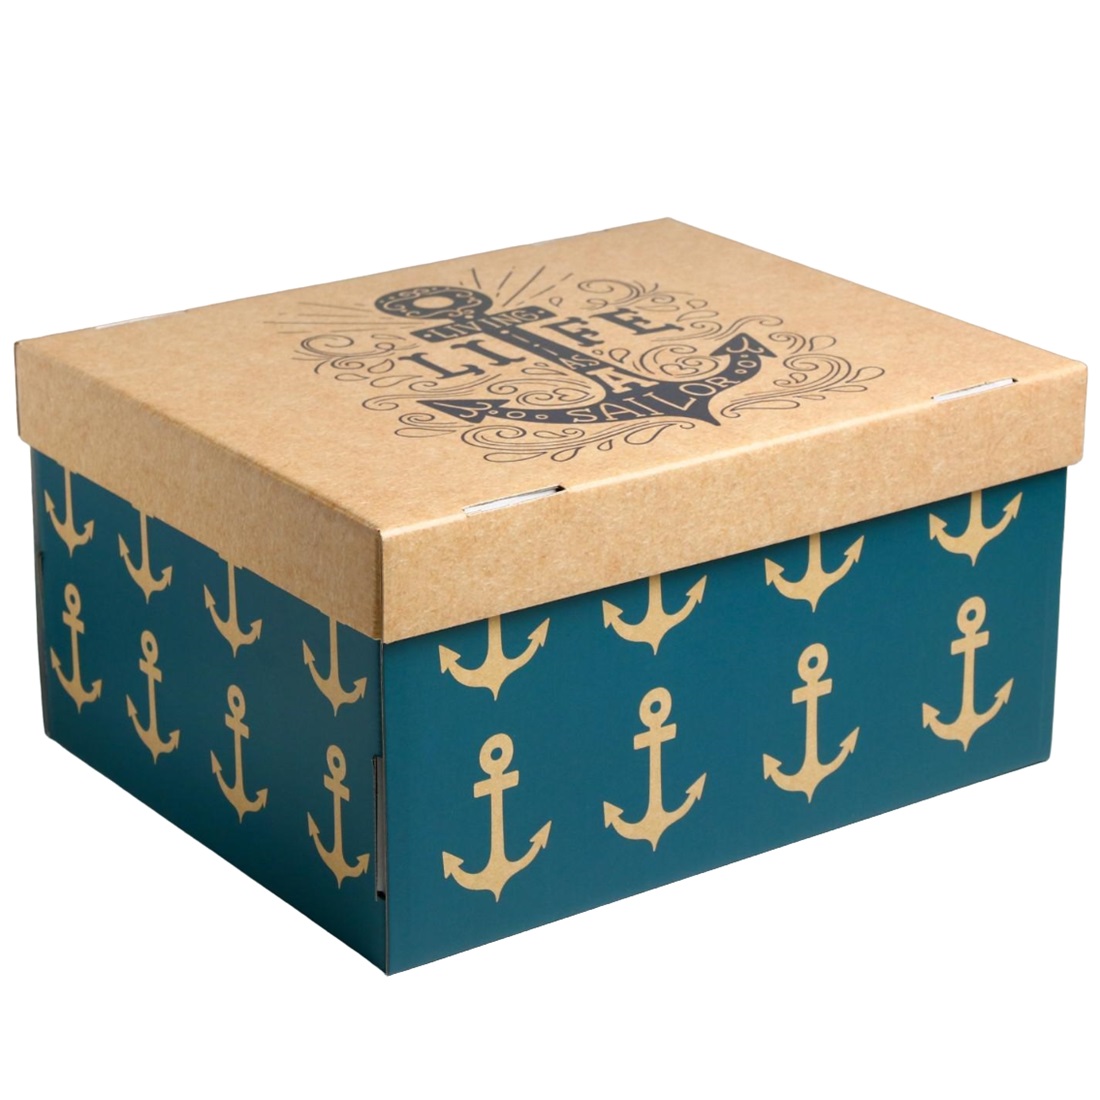 Подарочная упаковка Коробка складная «Морская», 31,2 х 25,6 х 16,1 см (Подарочная упаковка, Коробки)